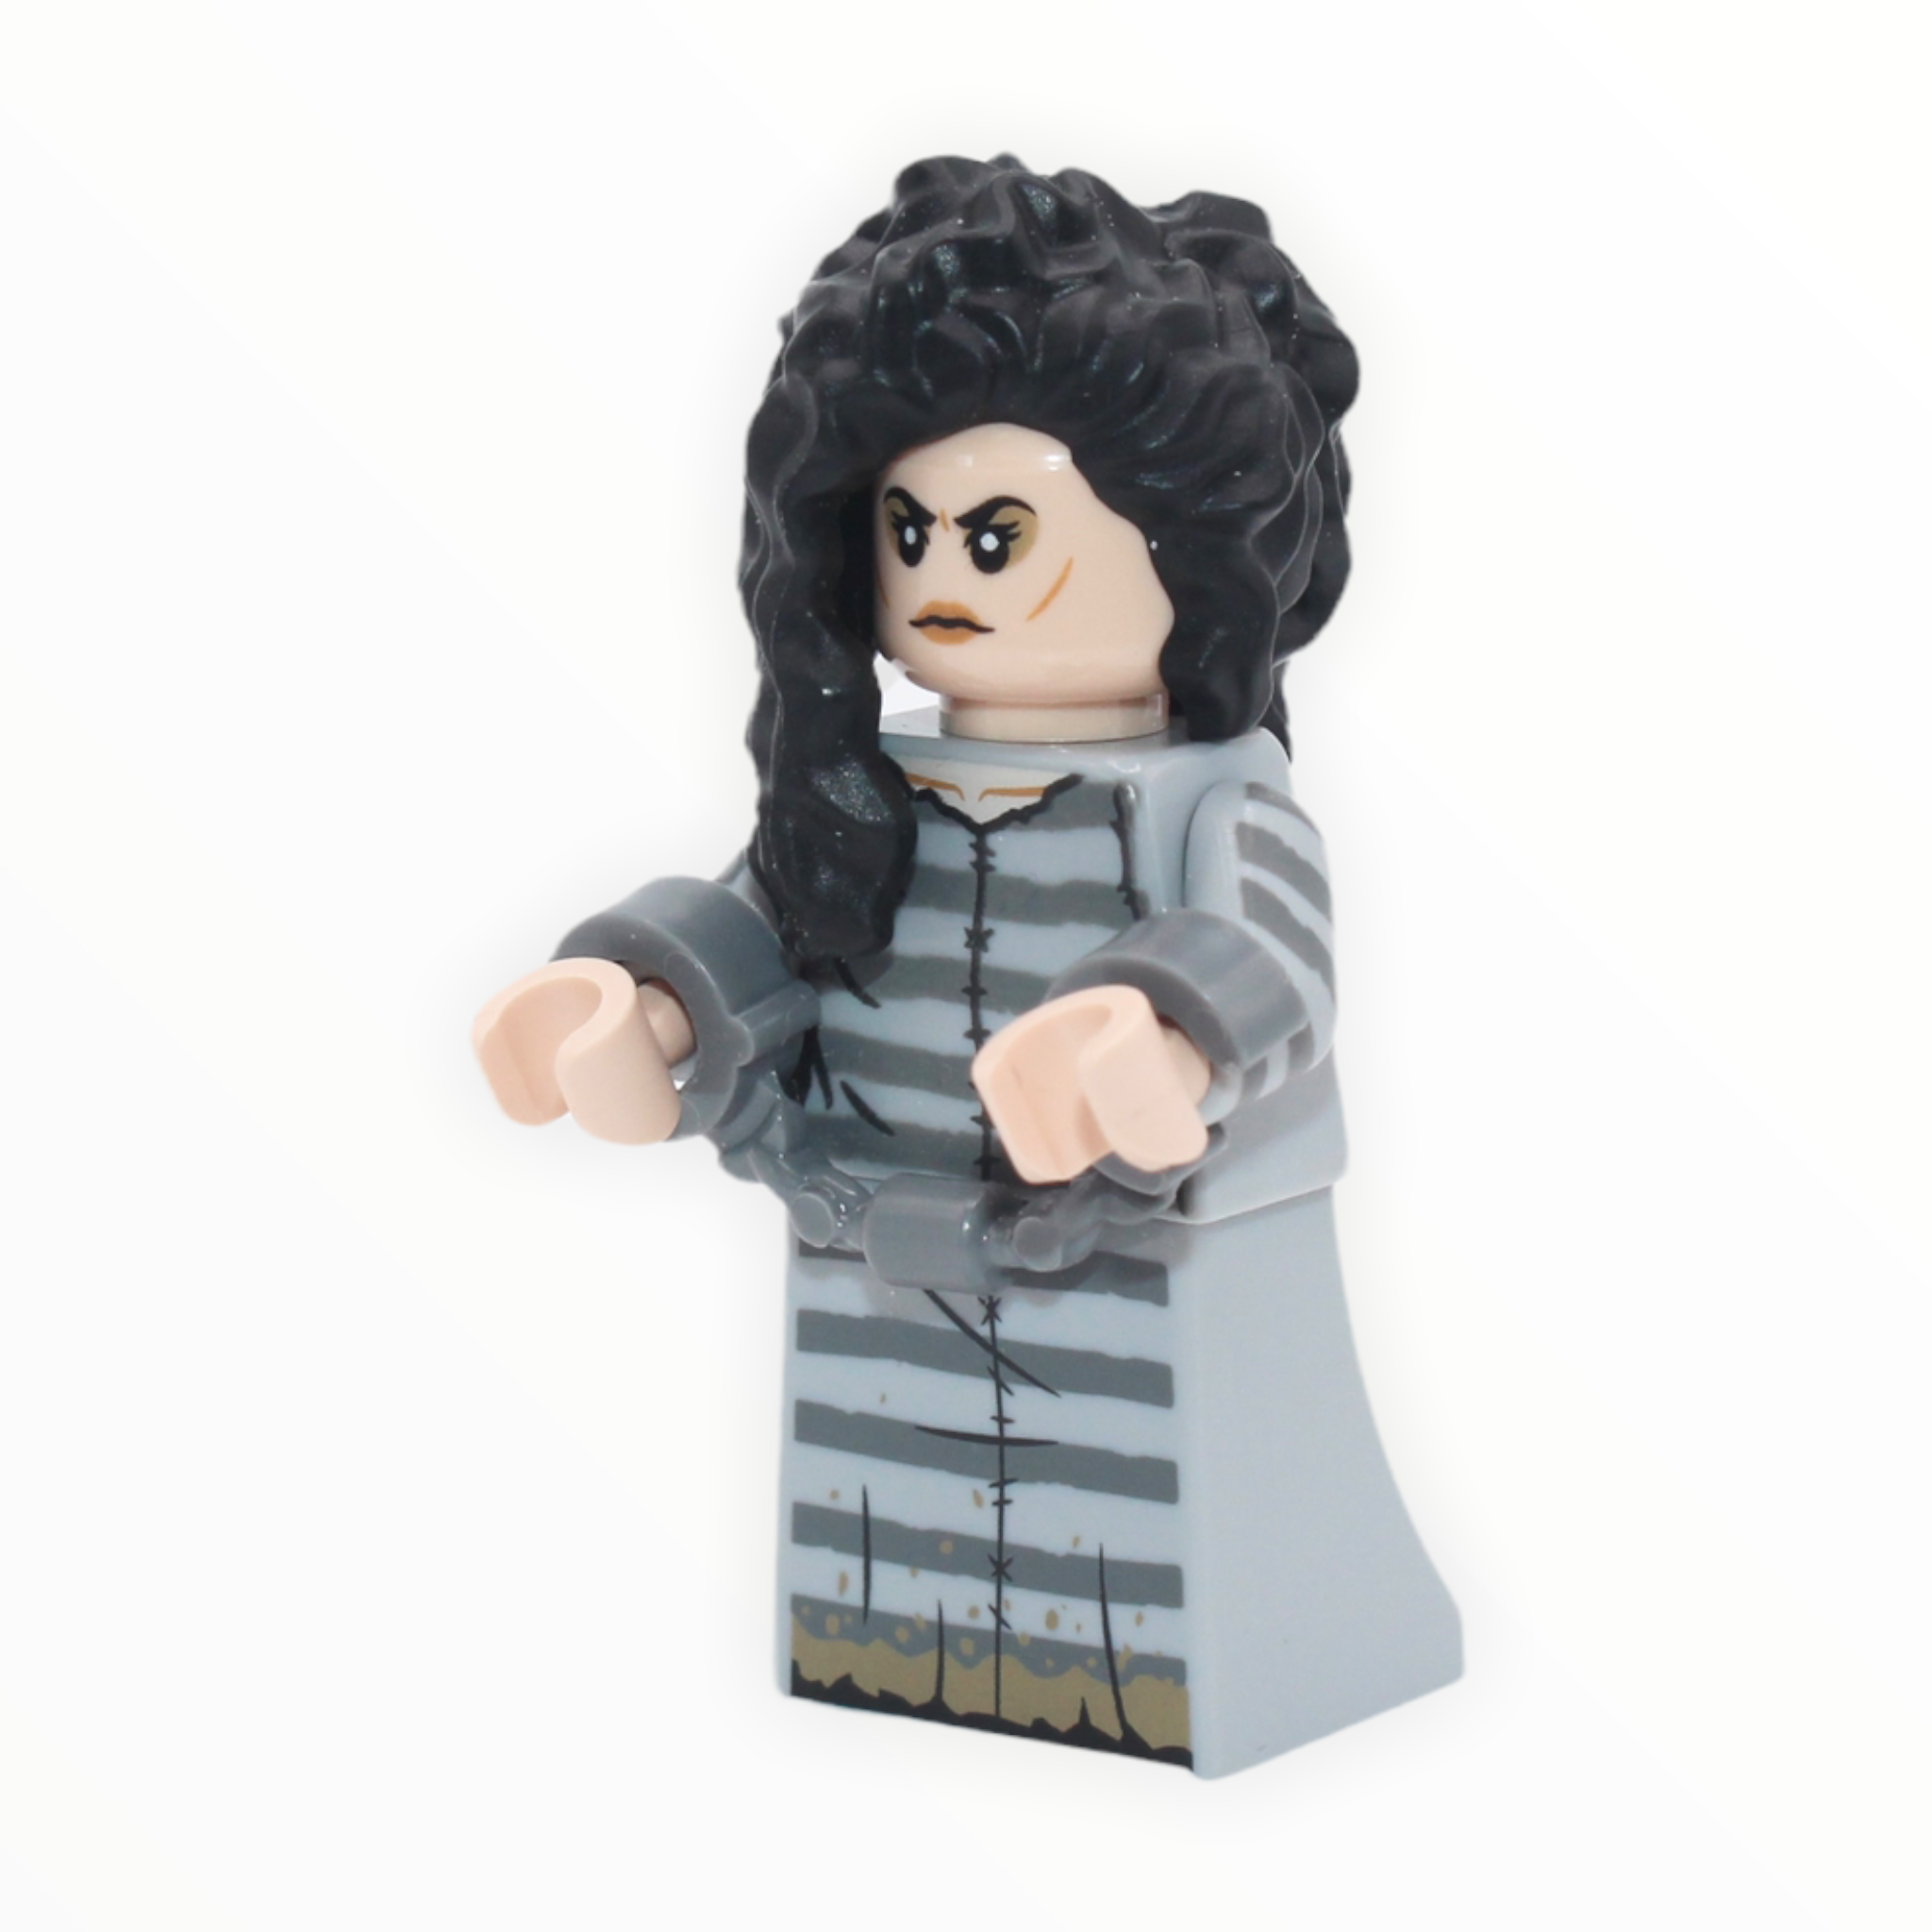 Harry Potter 2: Bellatrix Lestrange in Azkaban outfit